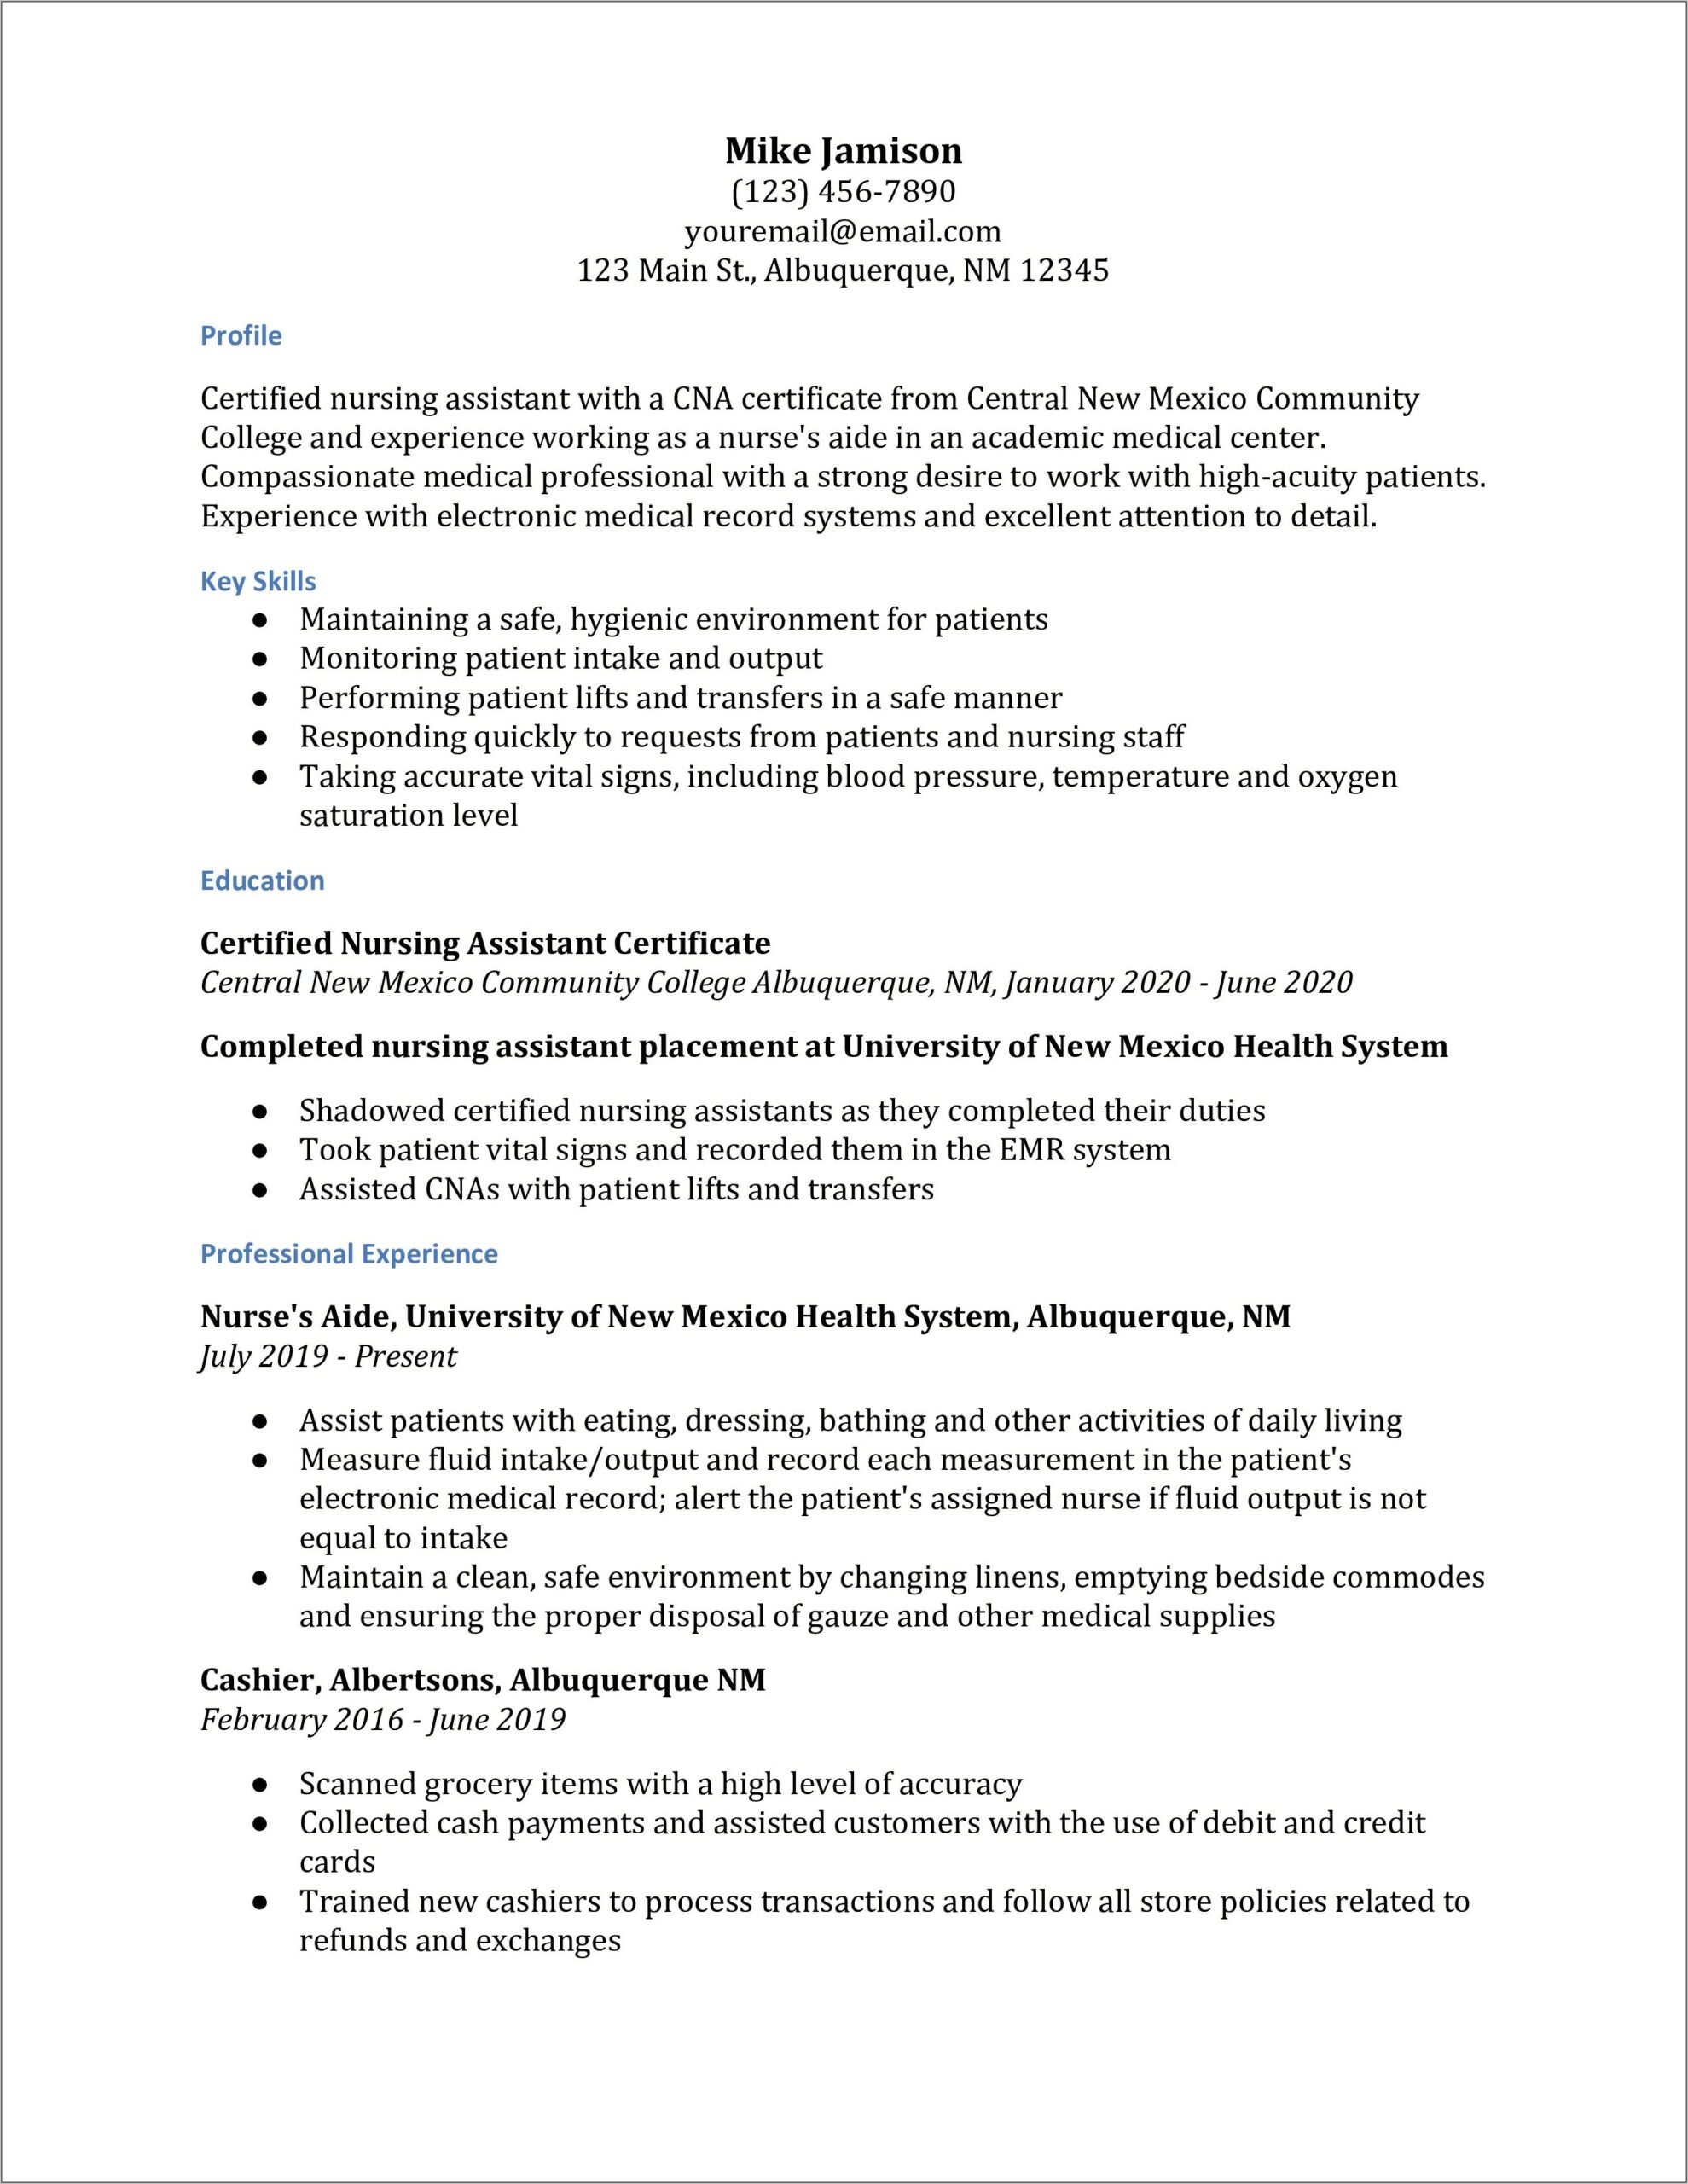 Certified Nursing Assistant Cover Letter Resume